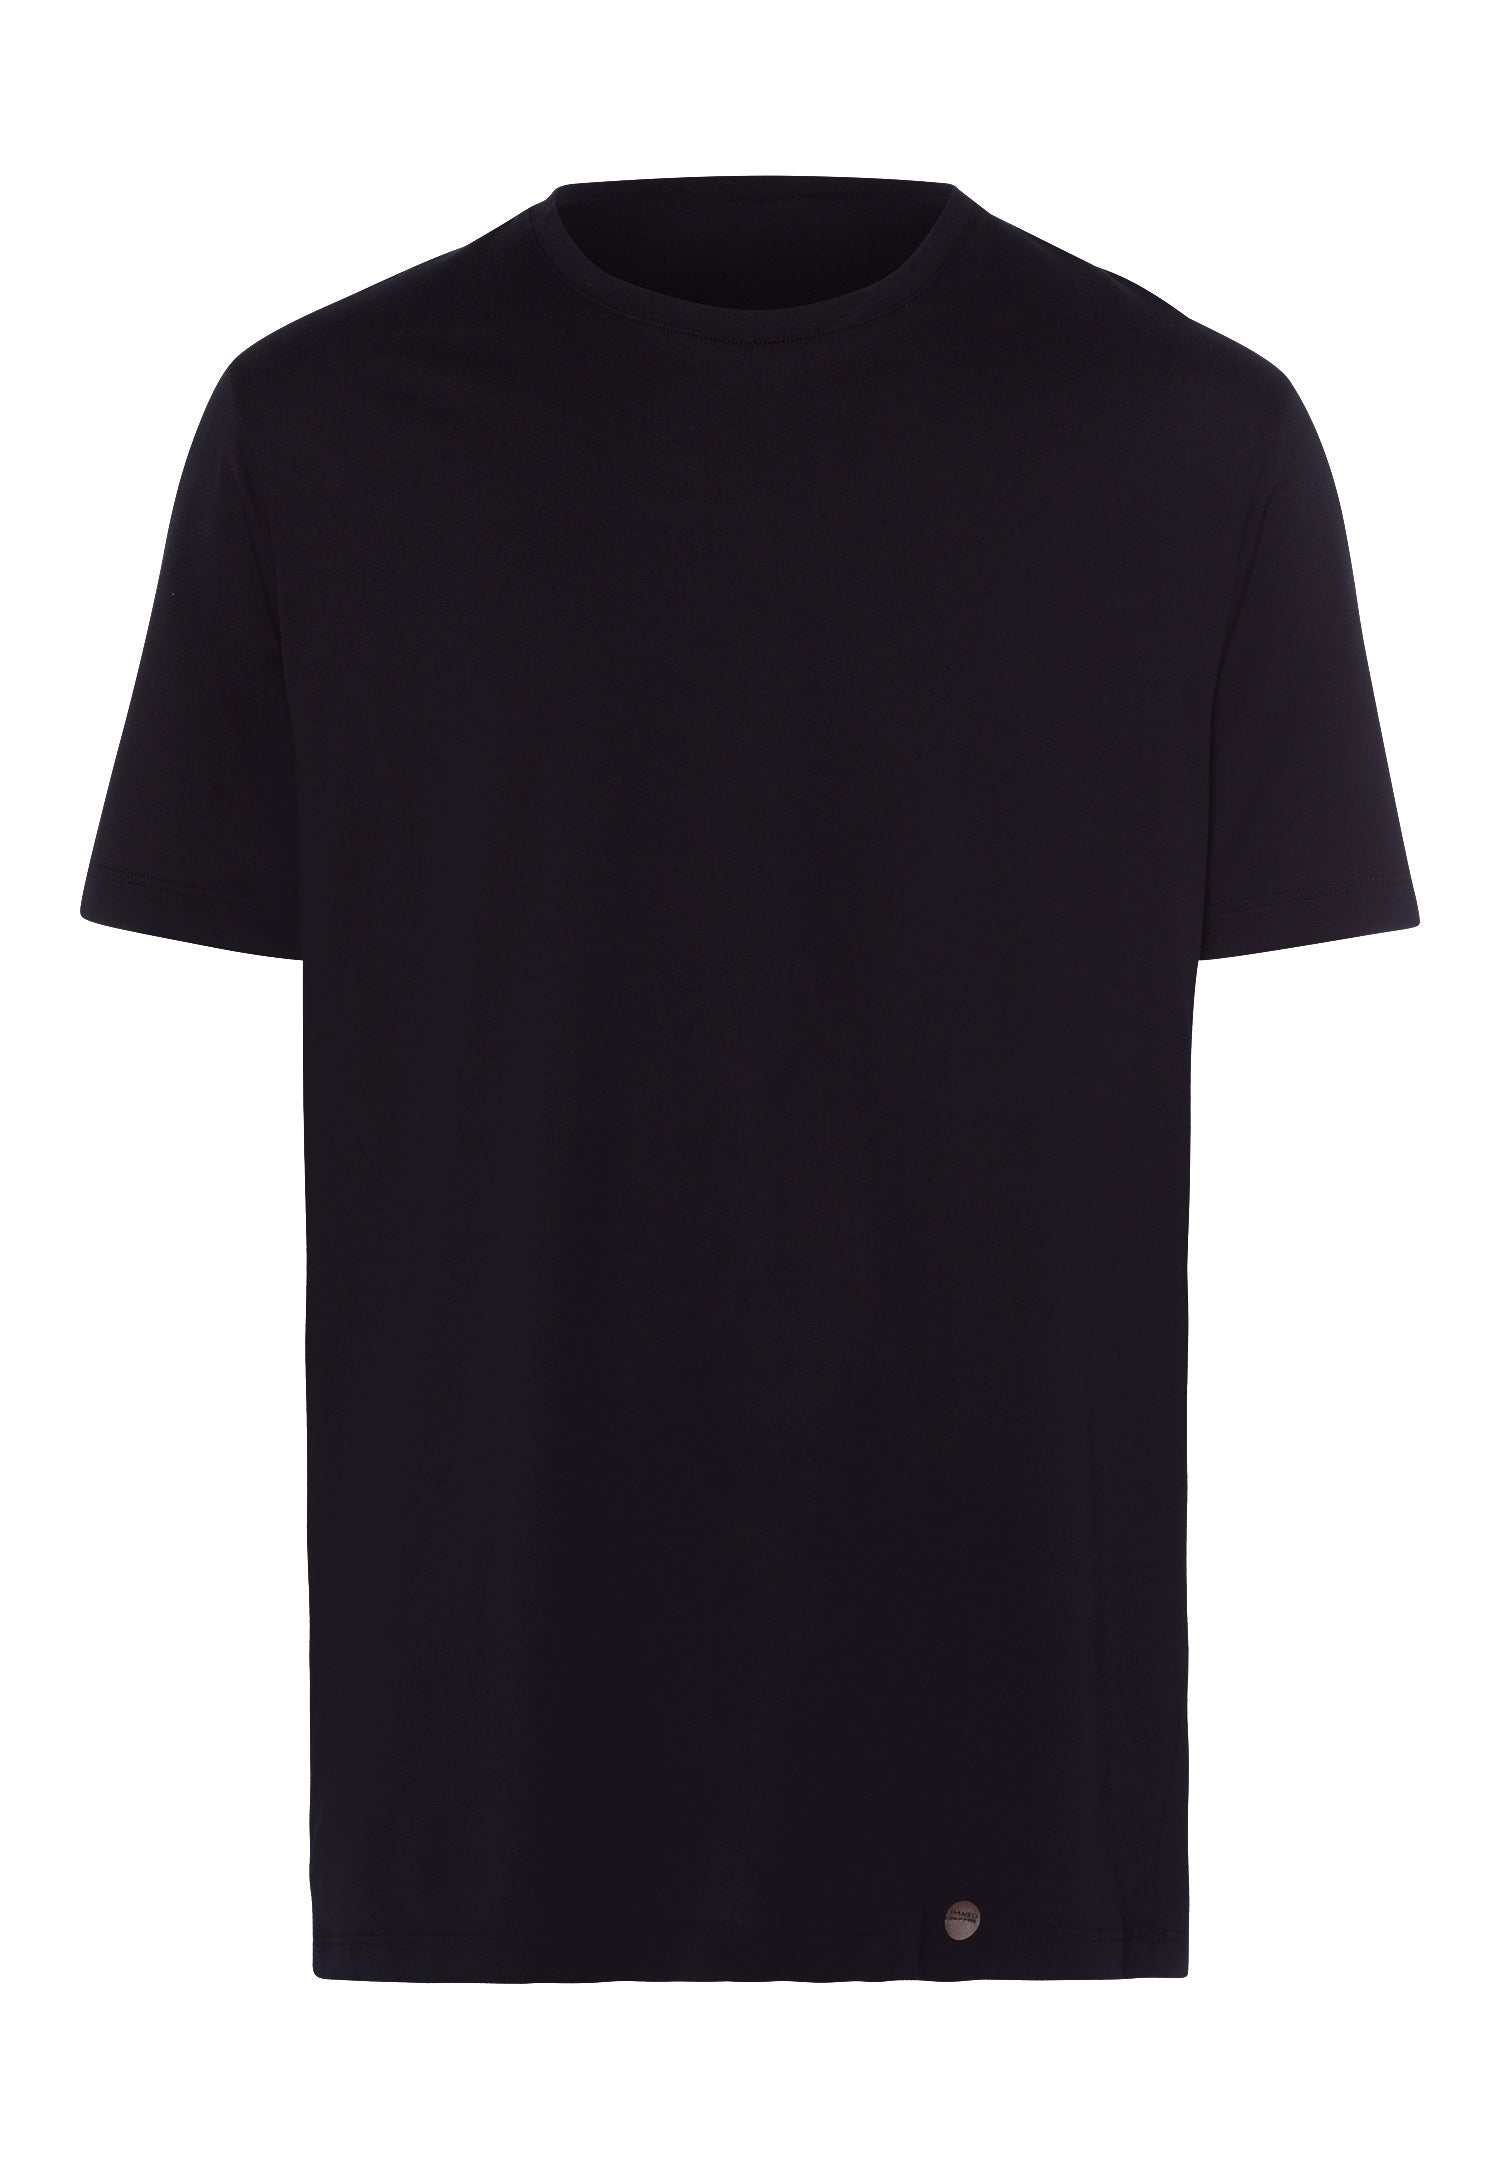 75430 Night & Day Short Sleeve Shirt - 019 Black